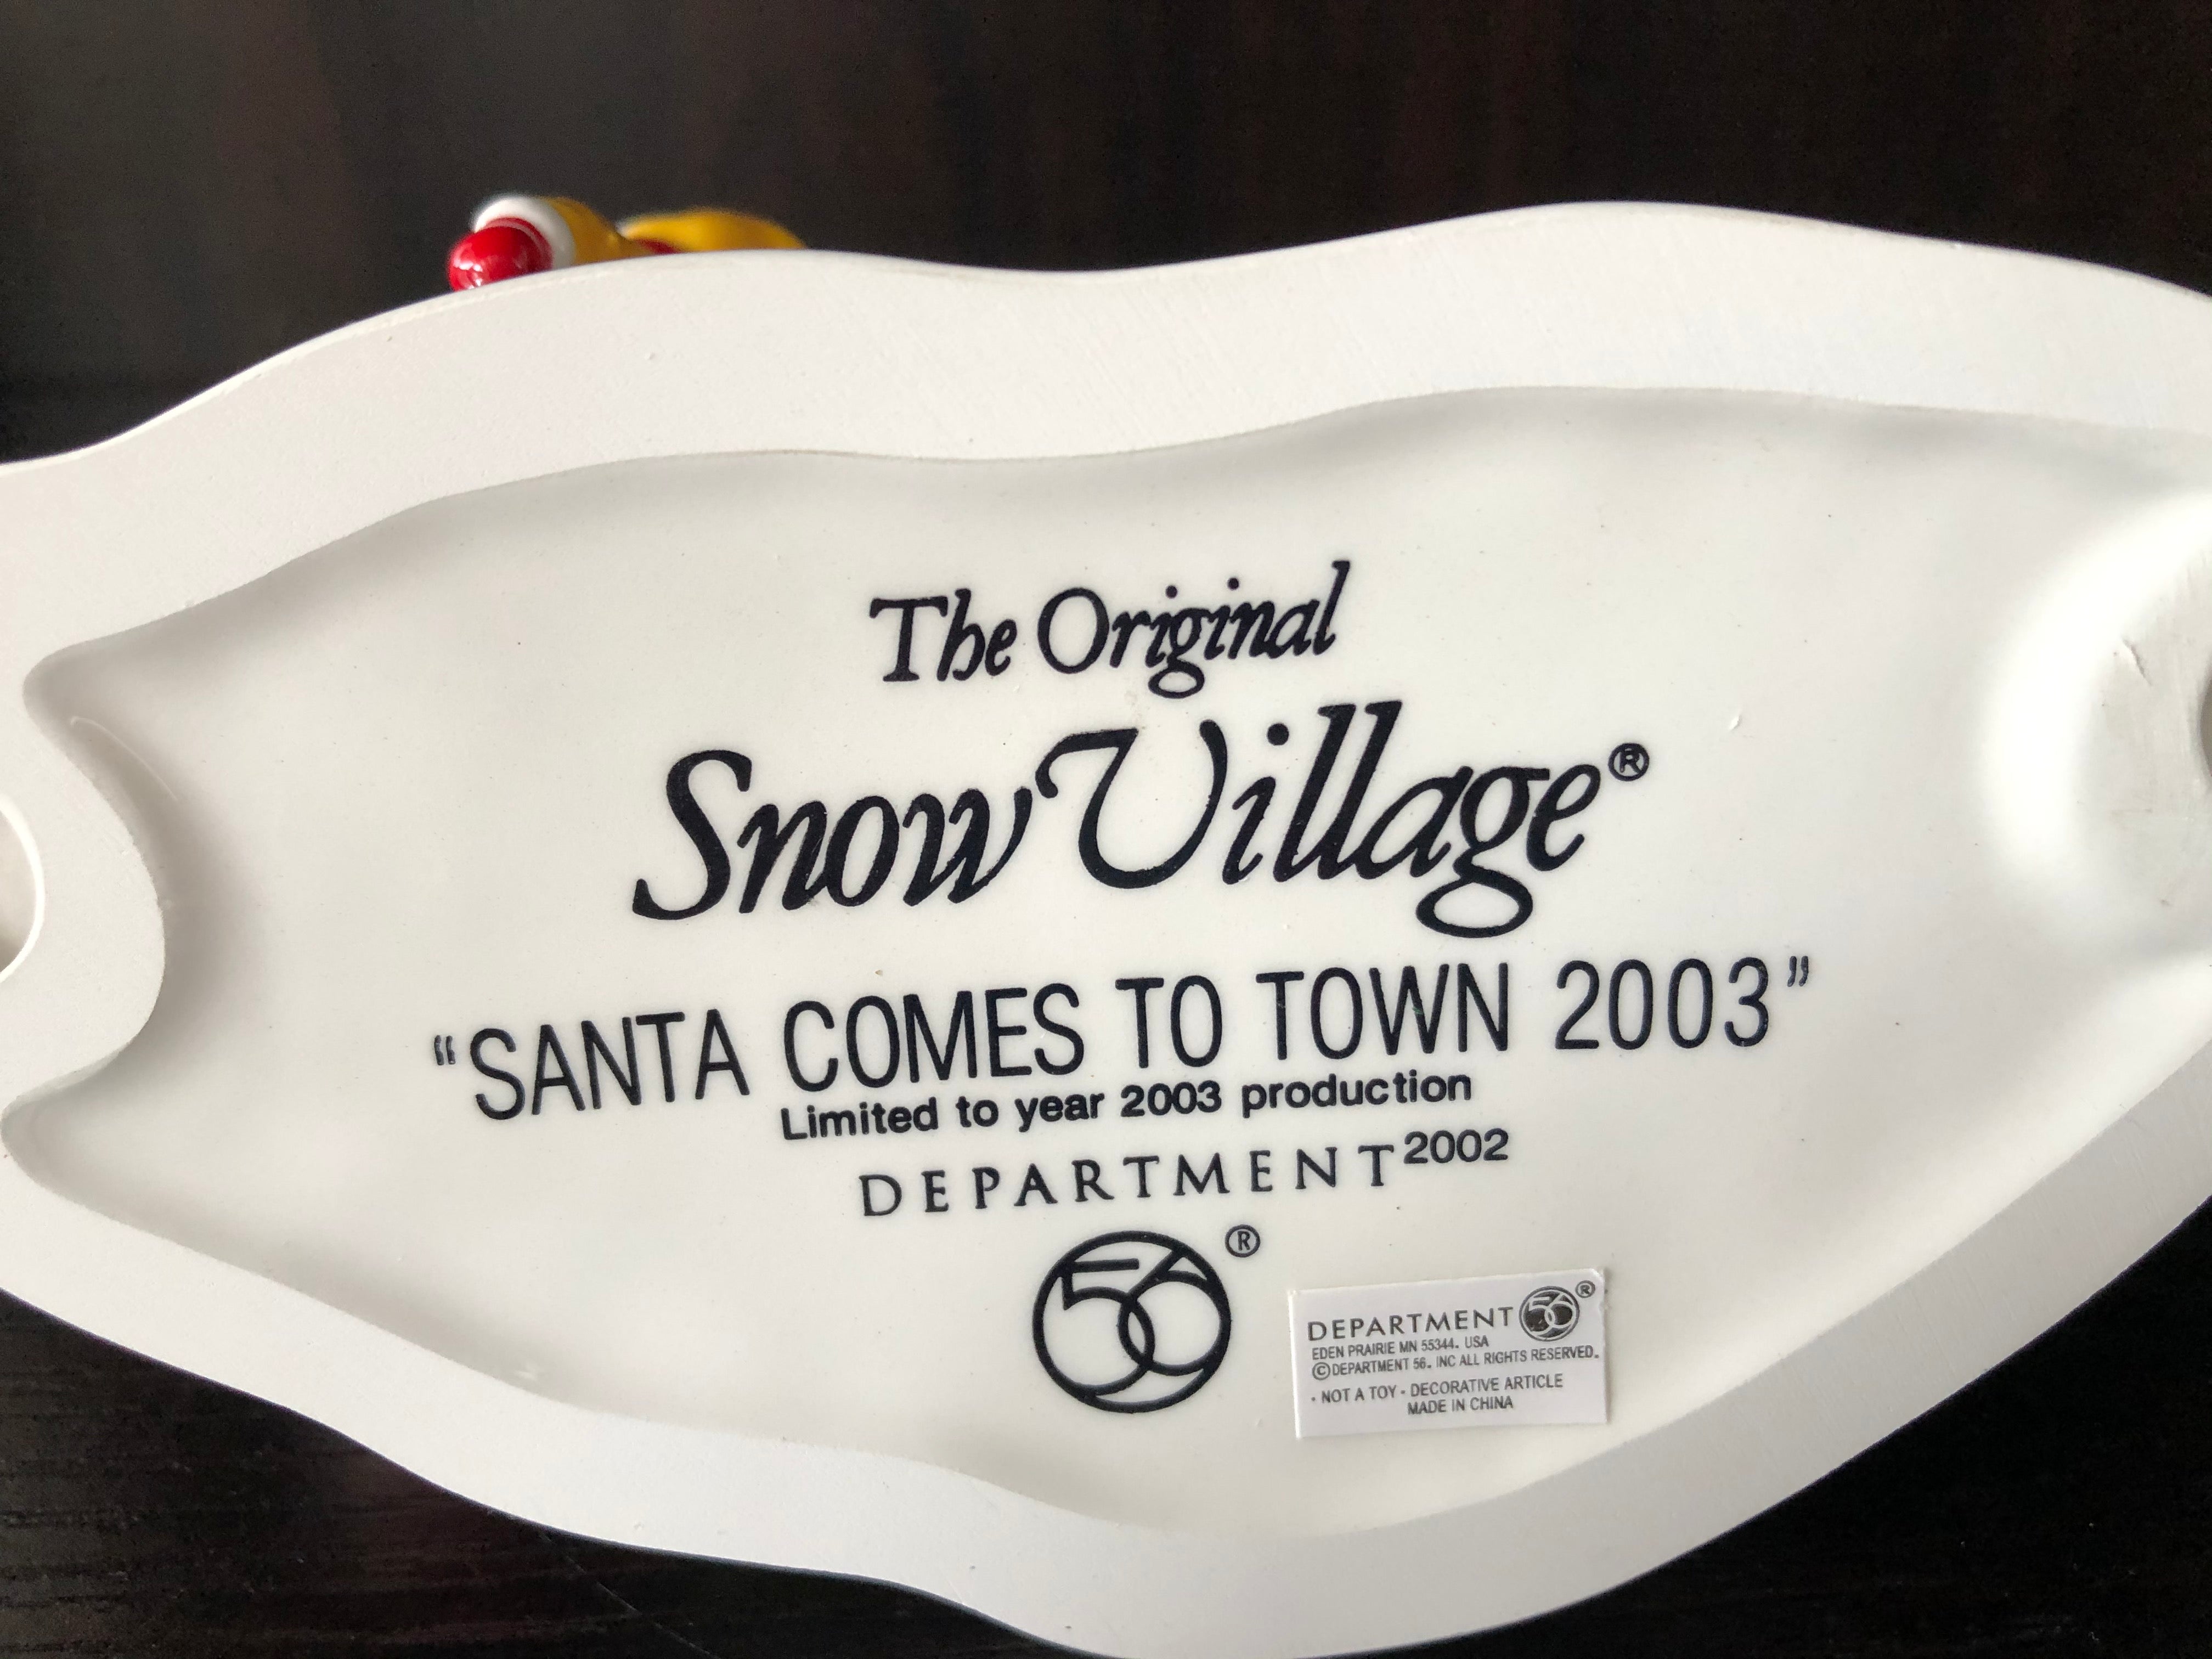 Santa Comes to Town "2003"